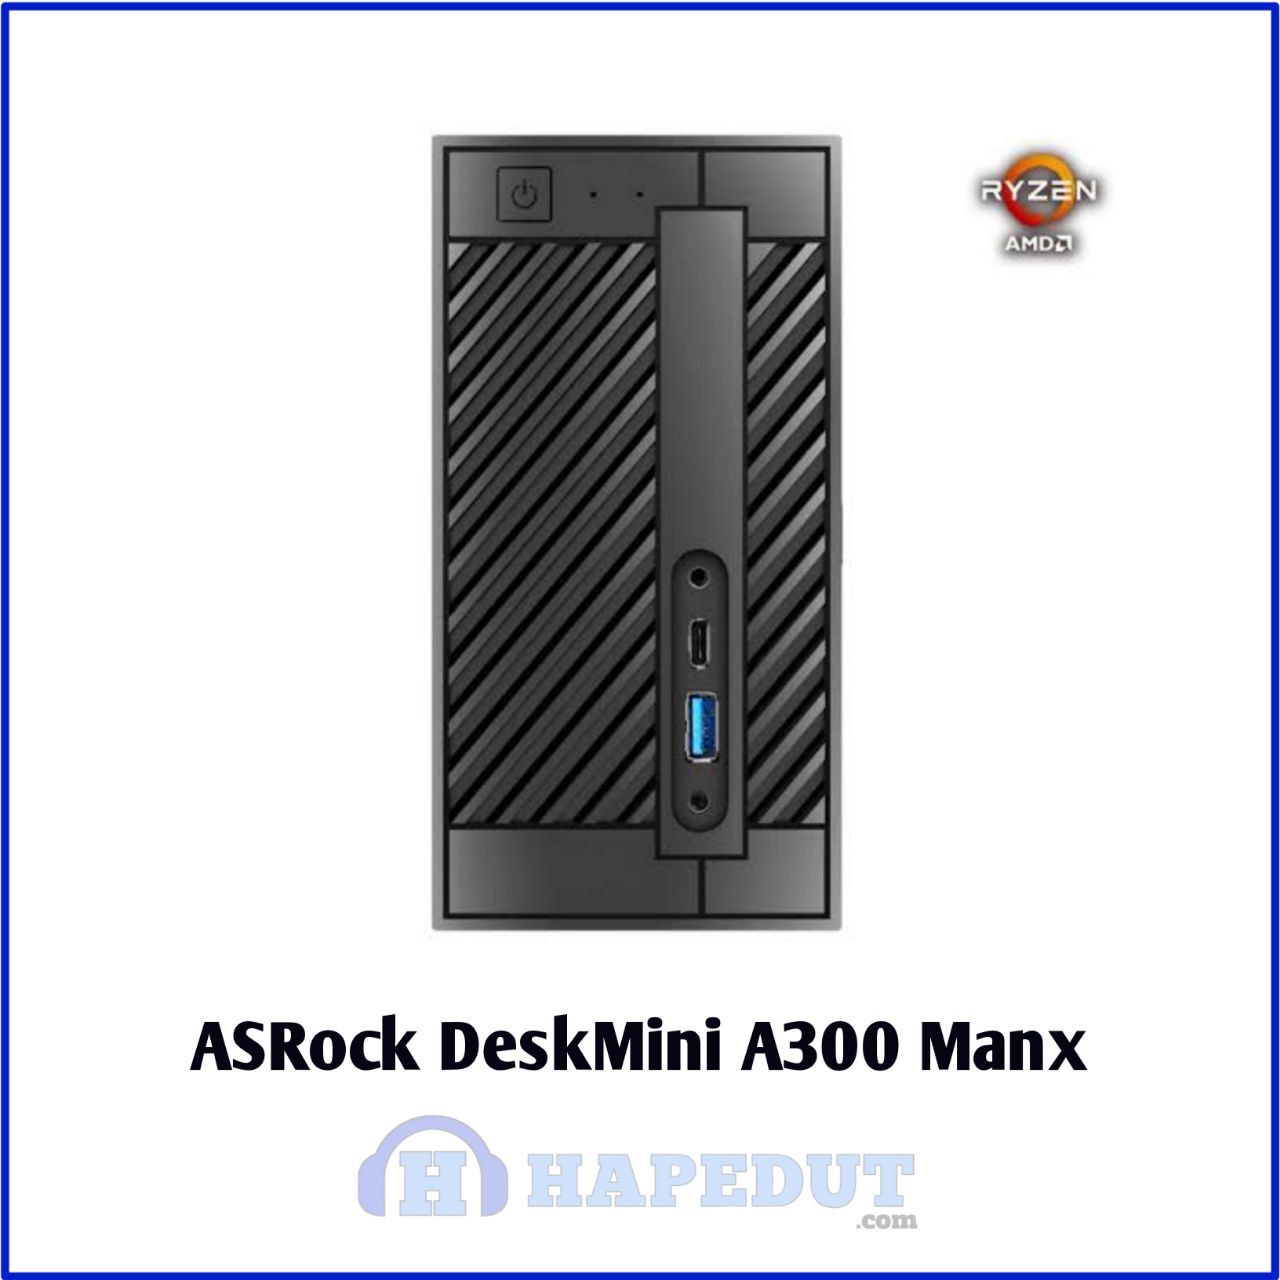 ASRock DeskMini A300 Manx : Hapedut